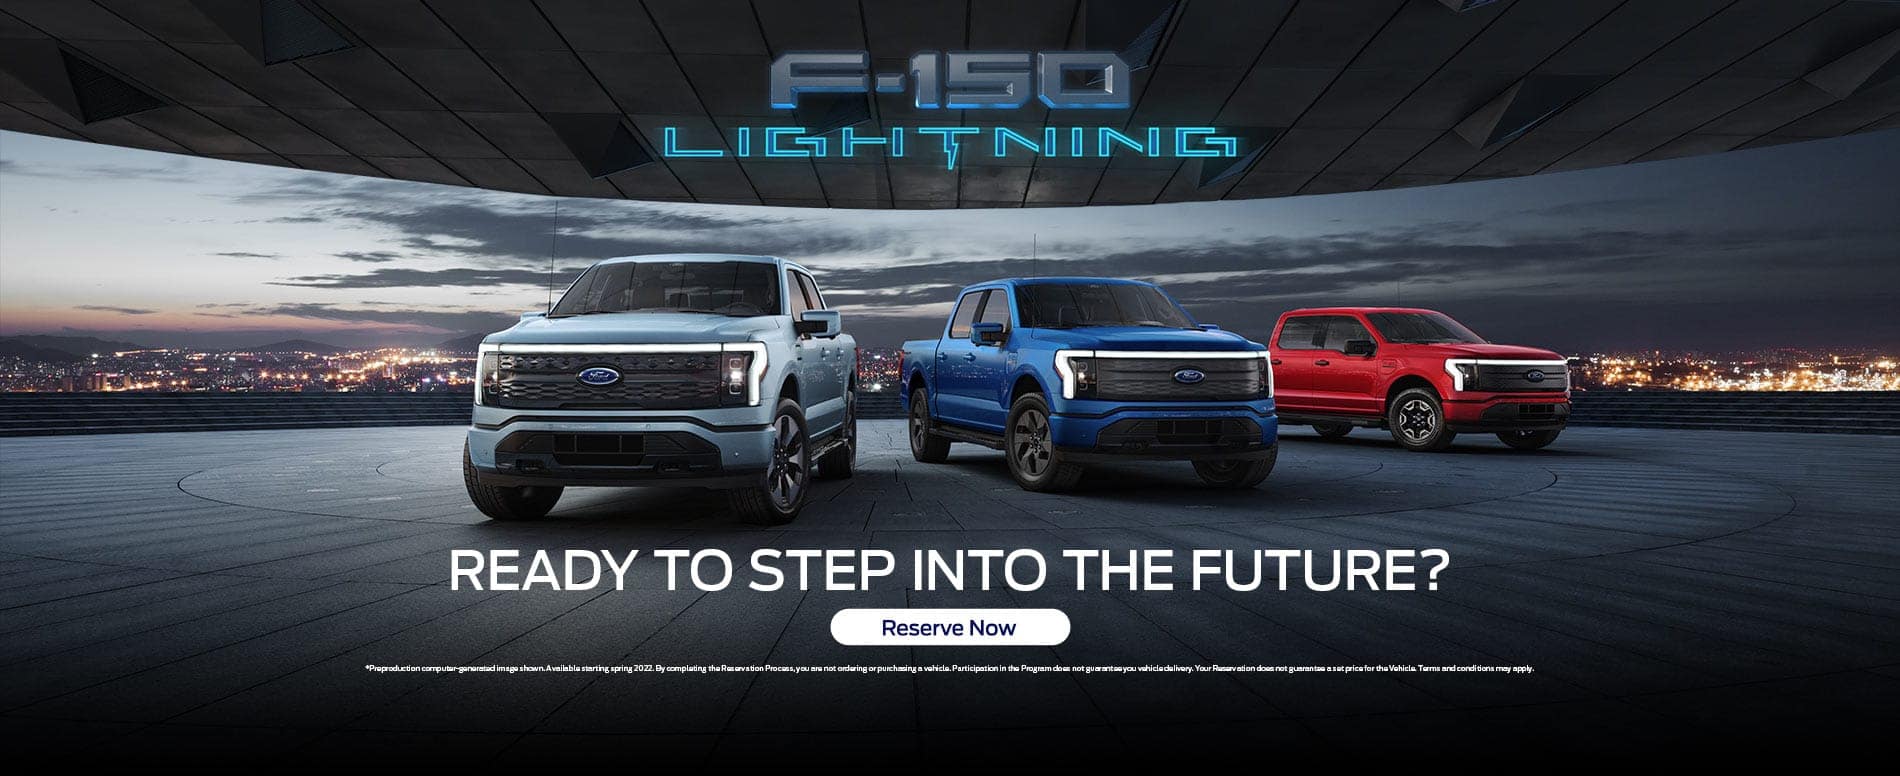 5 Ford-Sep21-F150-Lightning-Banner-1900x776